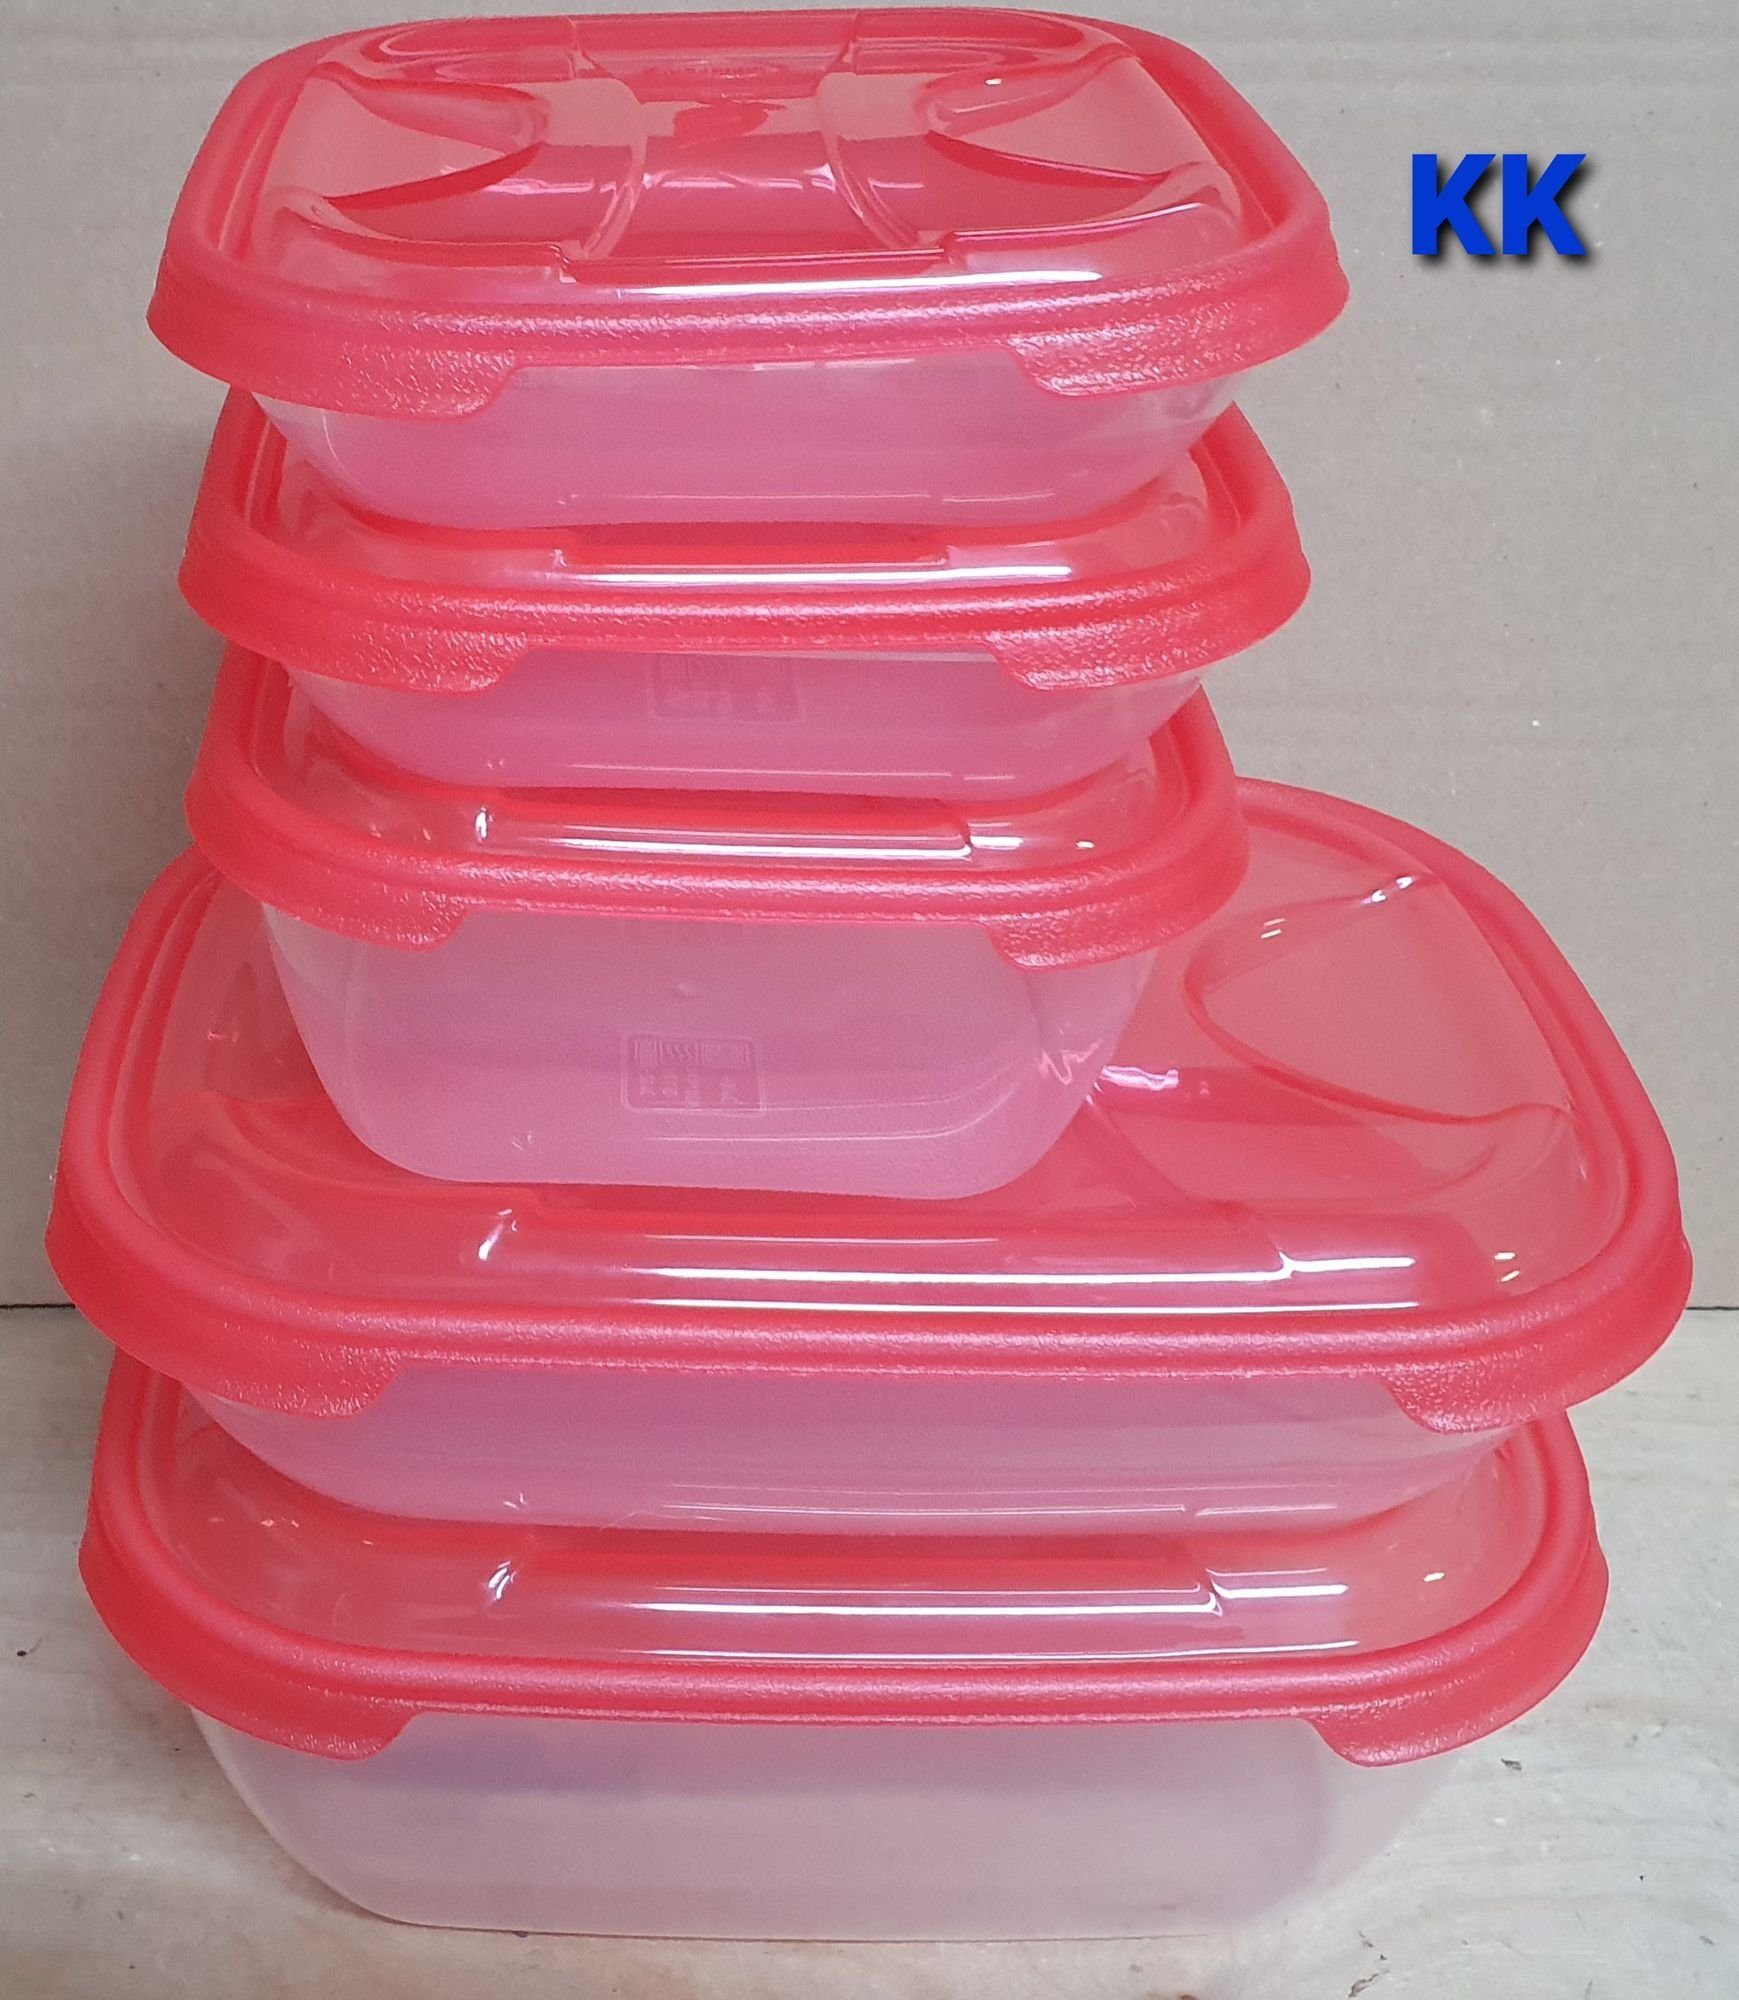 KK Frischhaltedose 5-teilig Frischhaltedosen Vorratsdosen rot Tontarelli Set